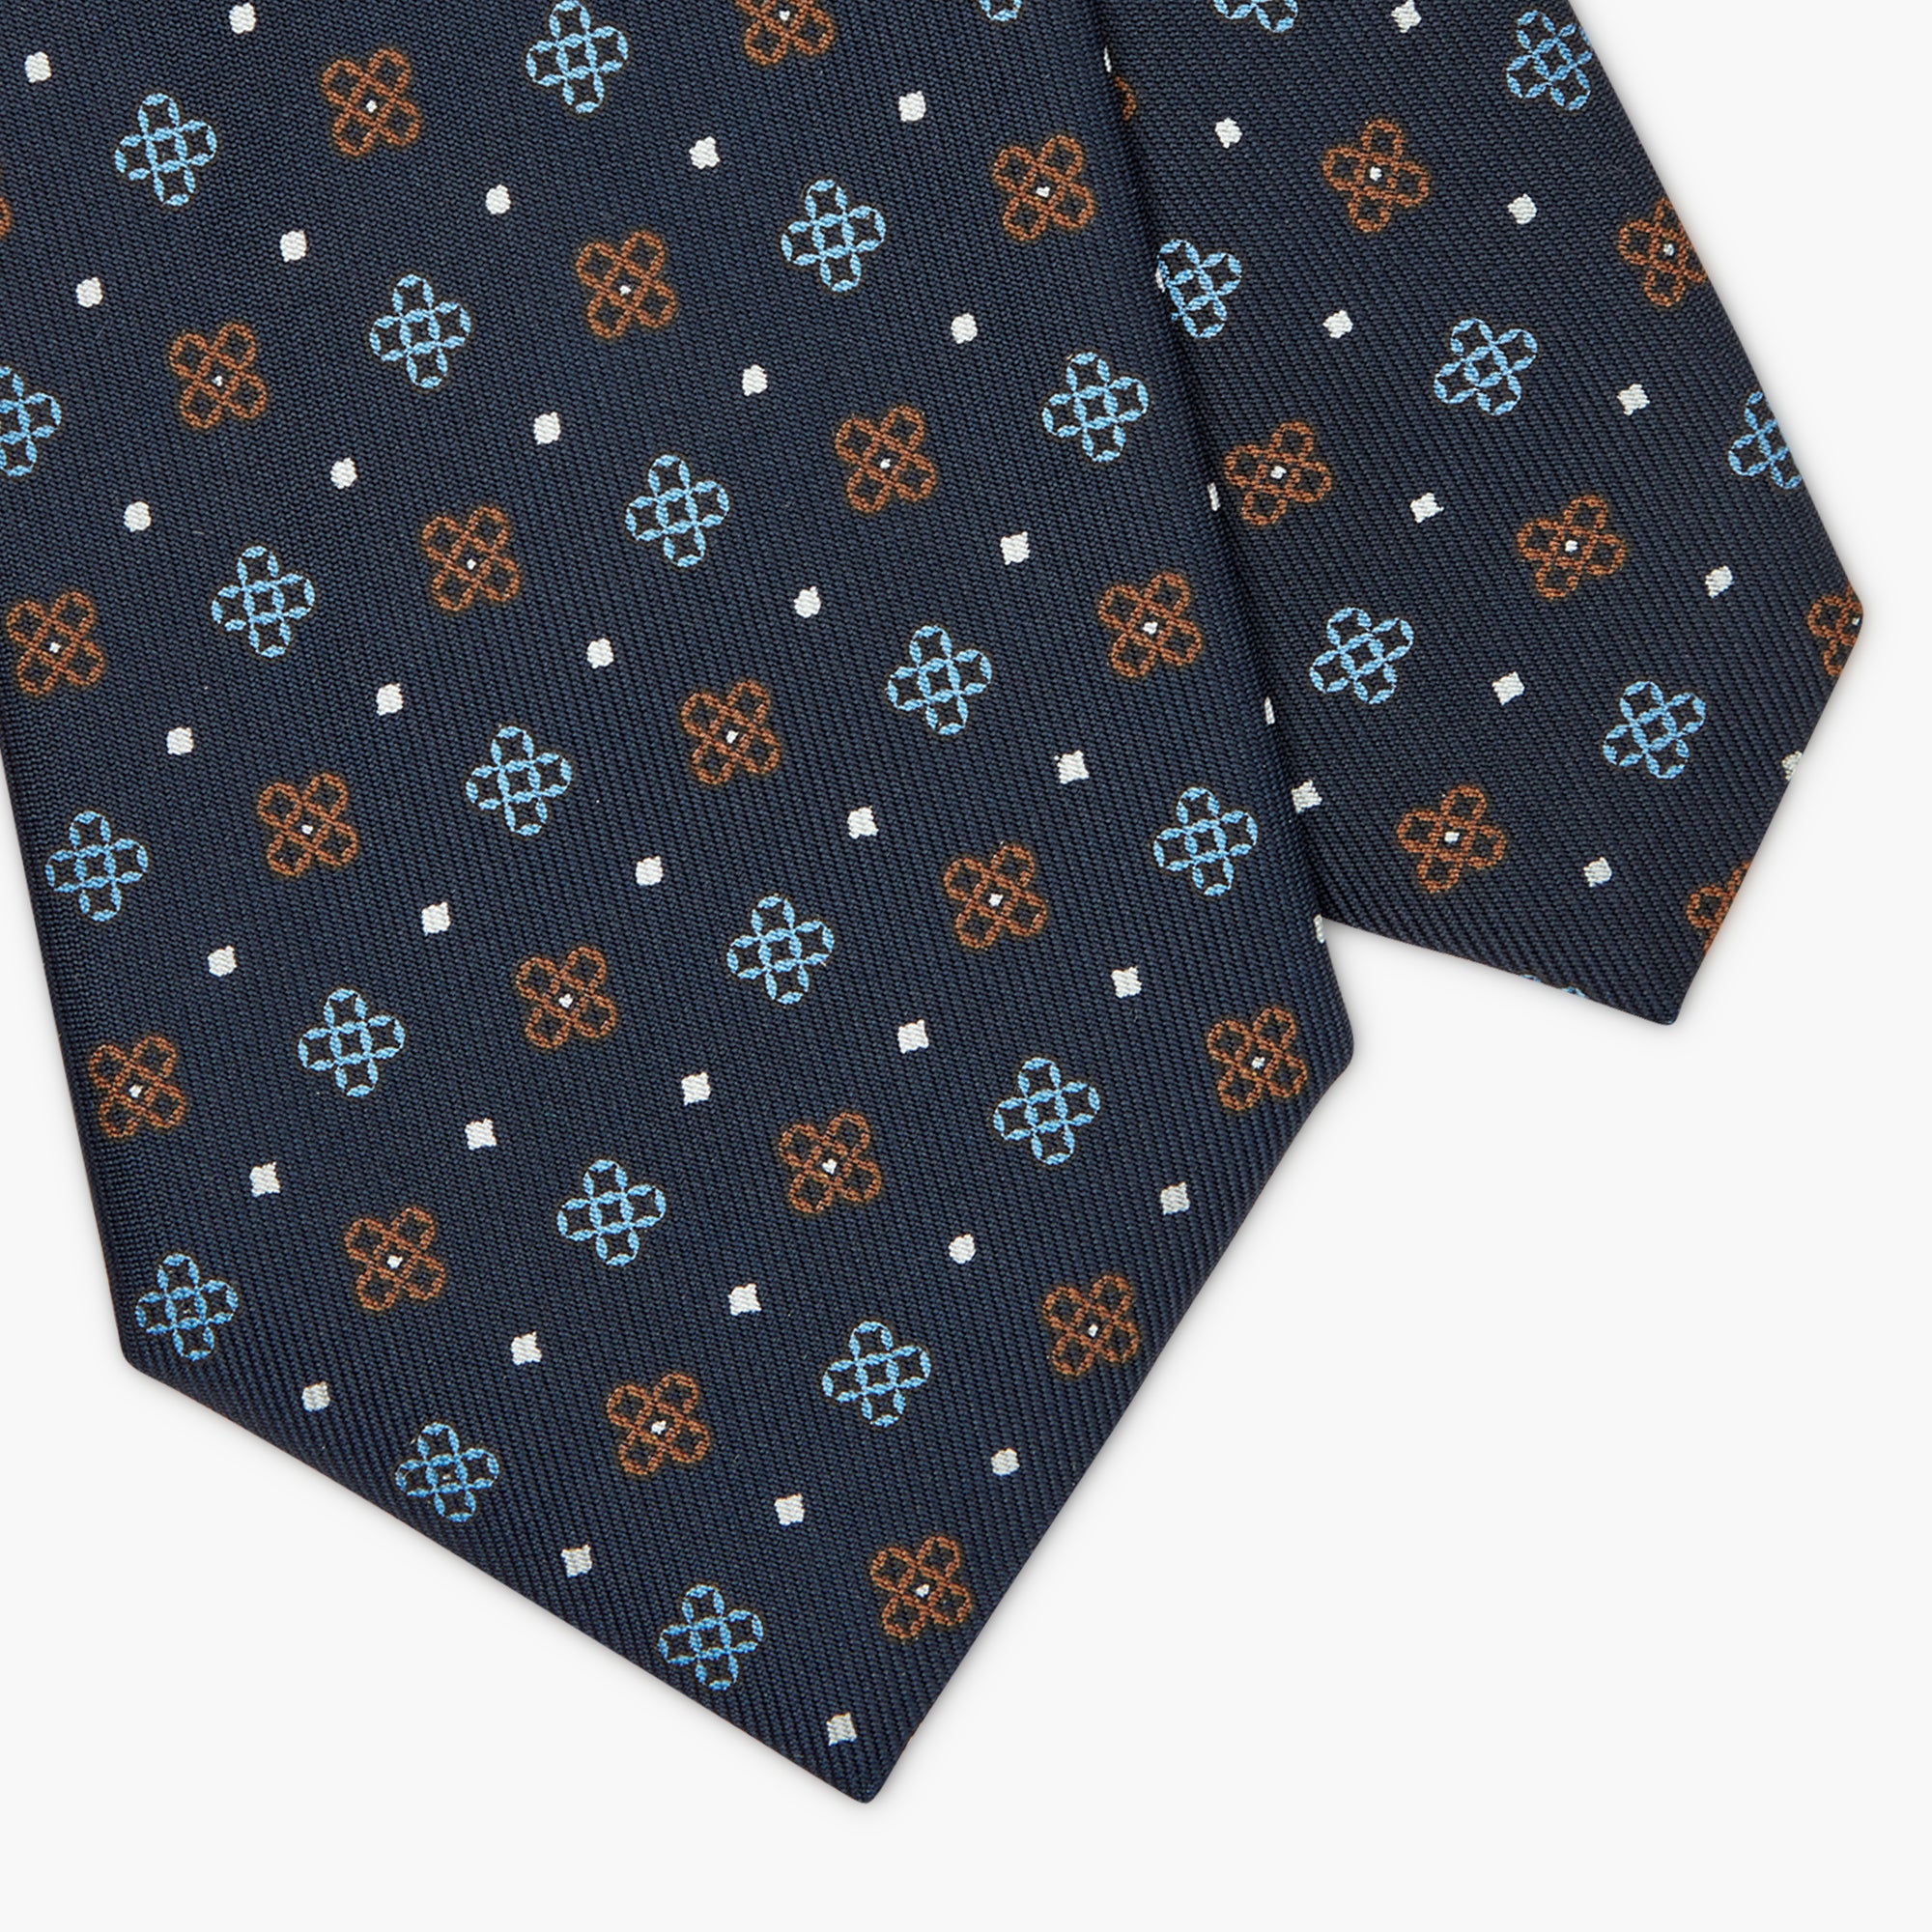 7-Fold Floral Printed English Silk Tie - Blue Brown